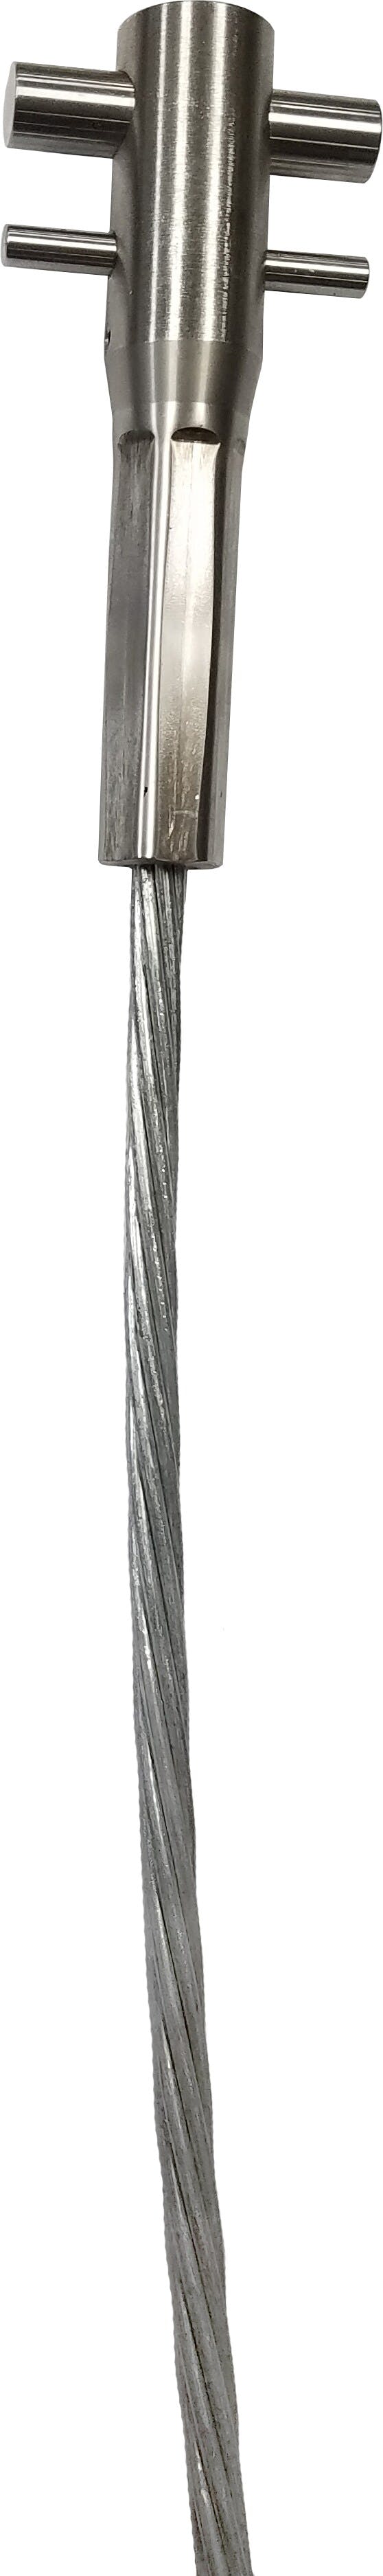 3M™ DBI-SALA® Lad-Saf™ Swaged Cable 6115005, 3/8 Inch, Galvanized Steel, 15 m_0